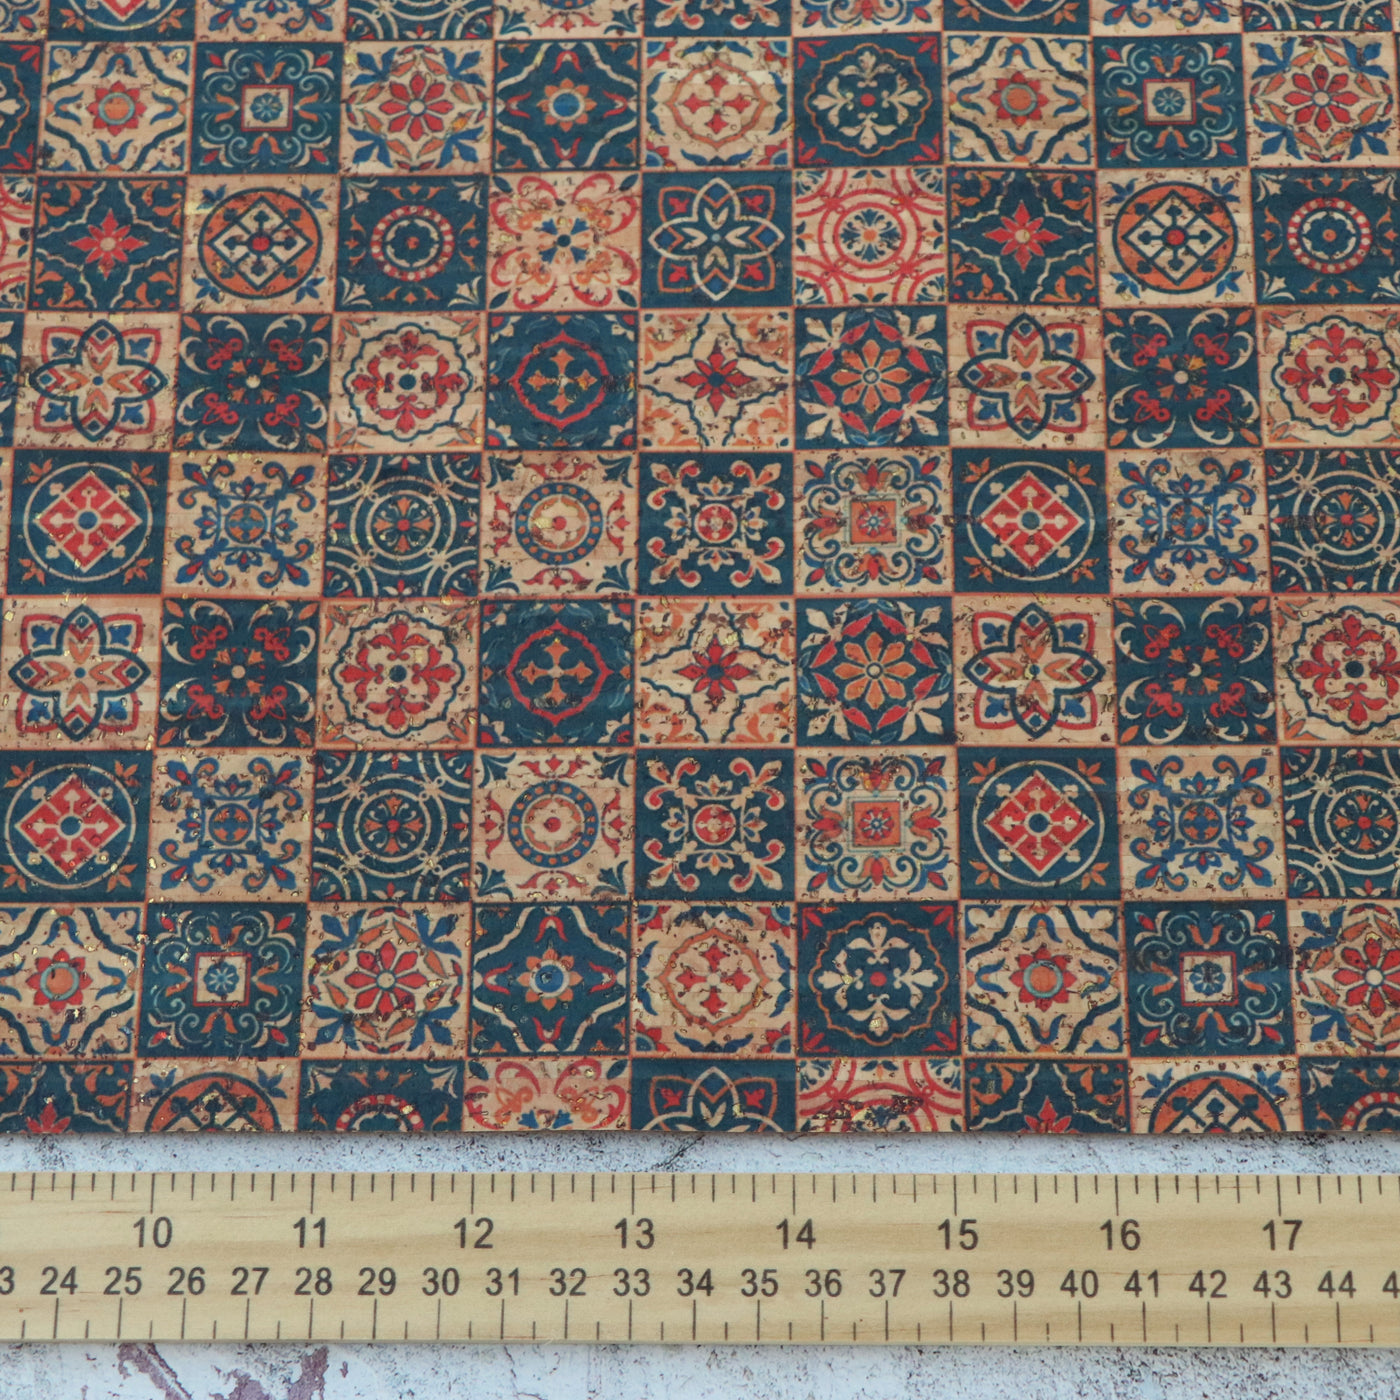 Limited Edition 1/2 Yard Cut: Gold Flecked Moroccan Mosaic Cork Fabric